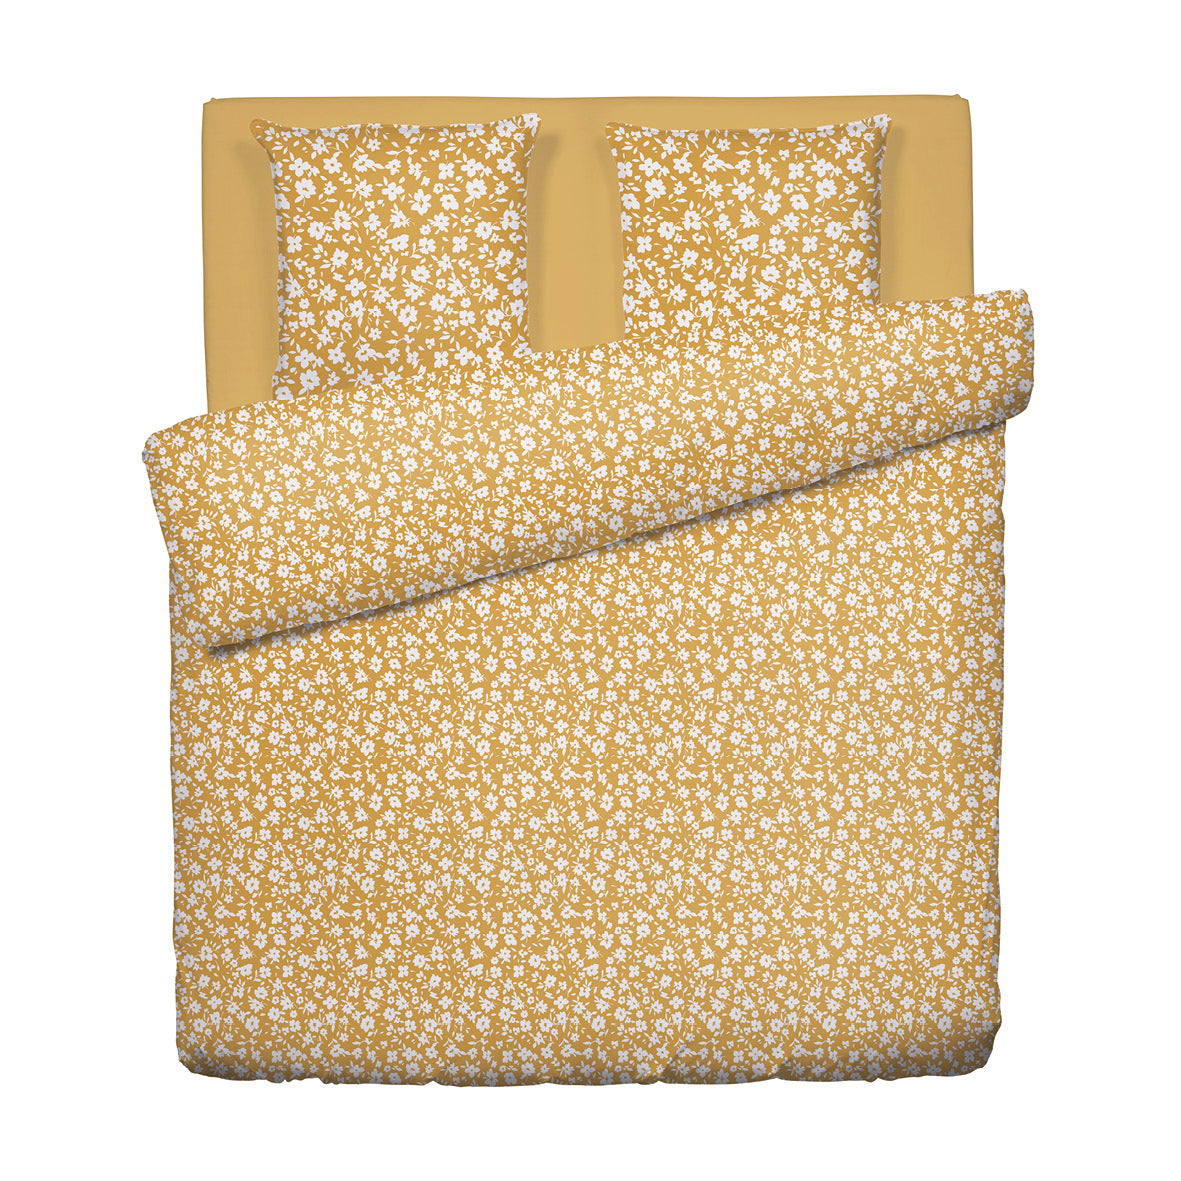 Duvet cover + pillowcase(s) cotton satin - Elégance yellow